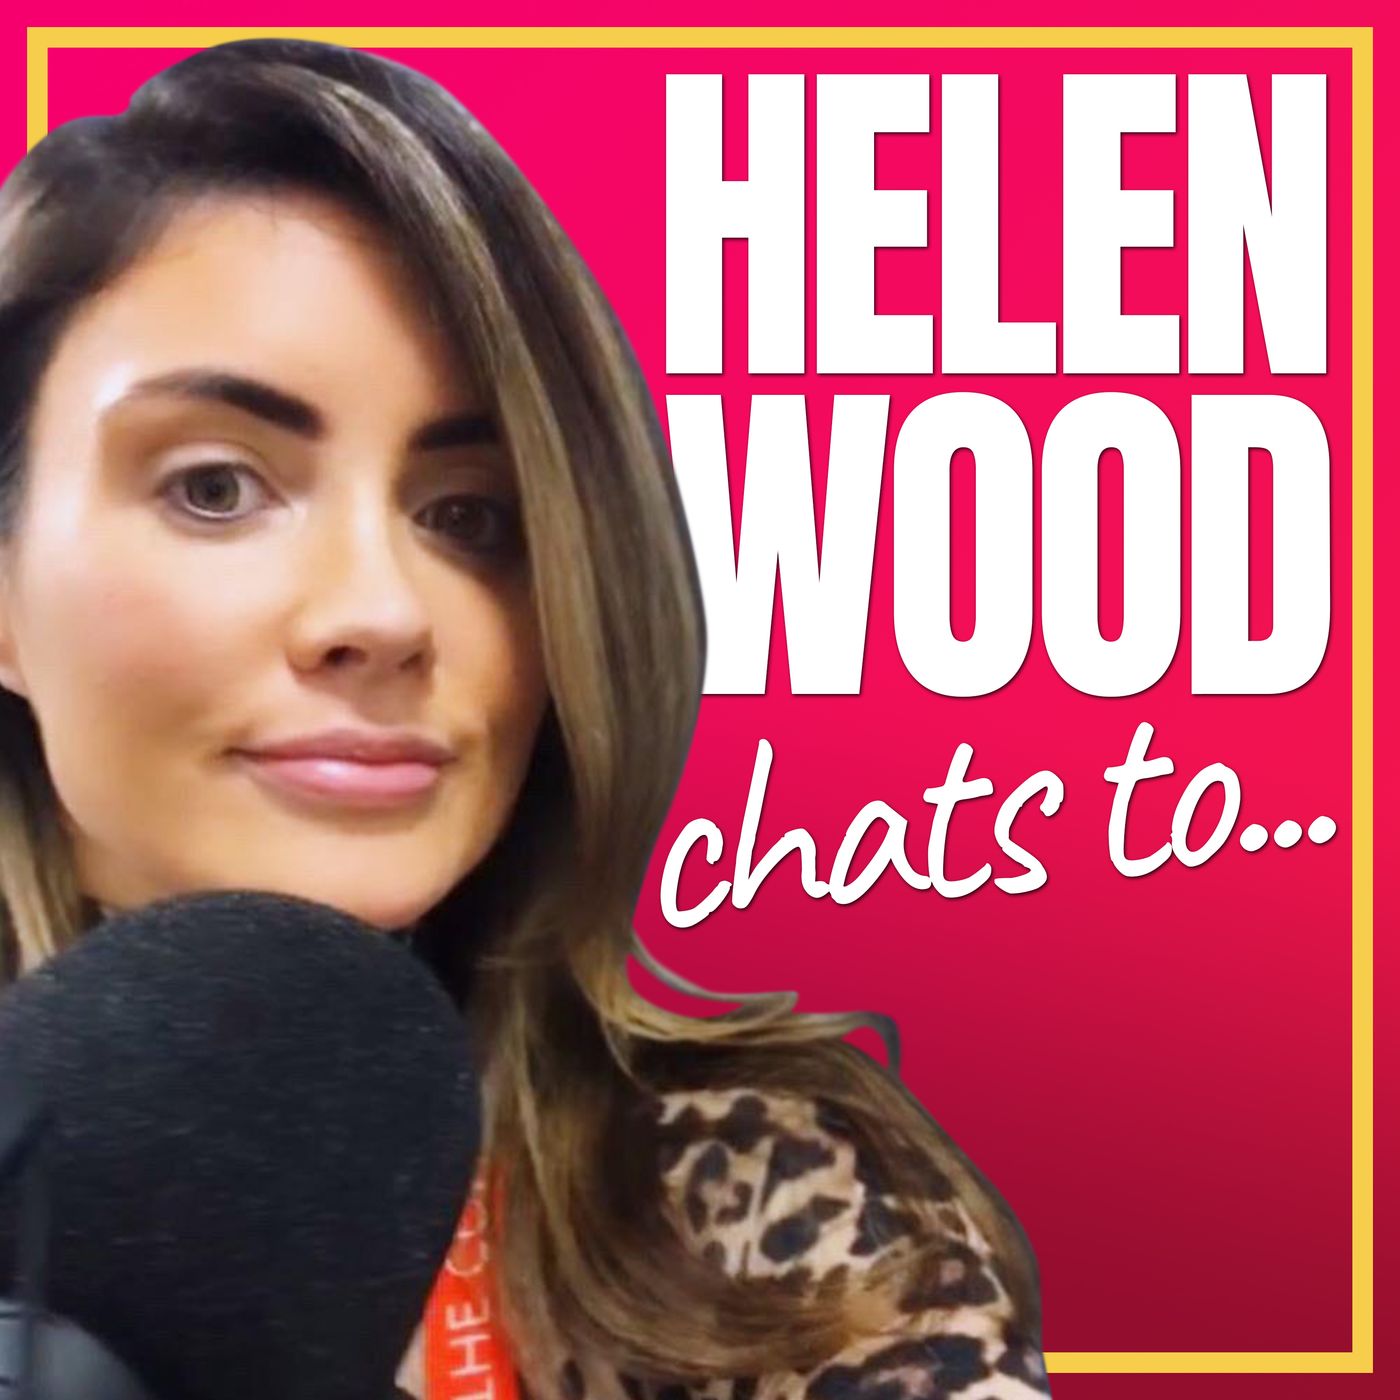 Helen wood porn